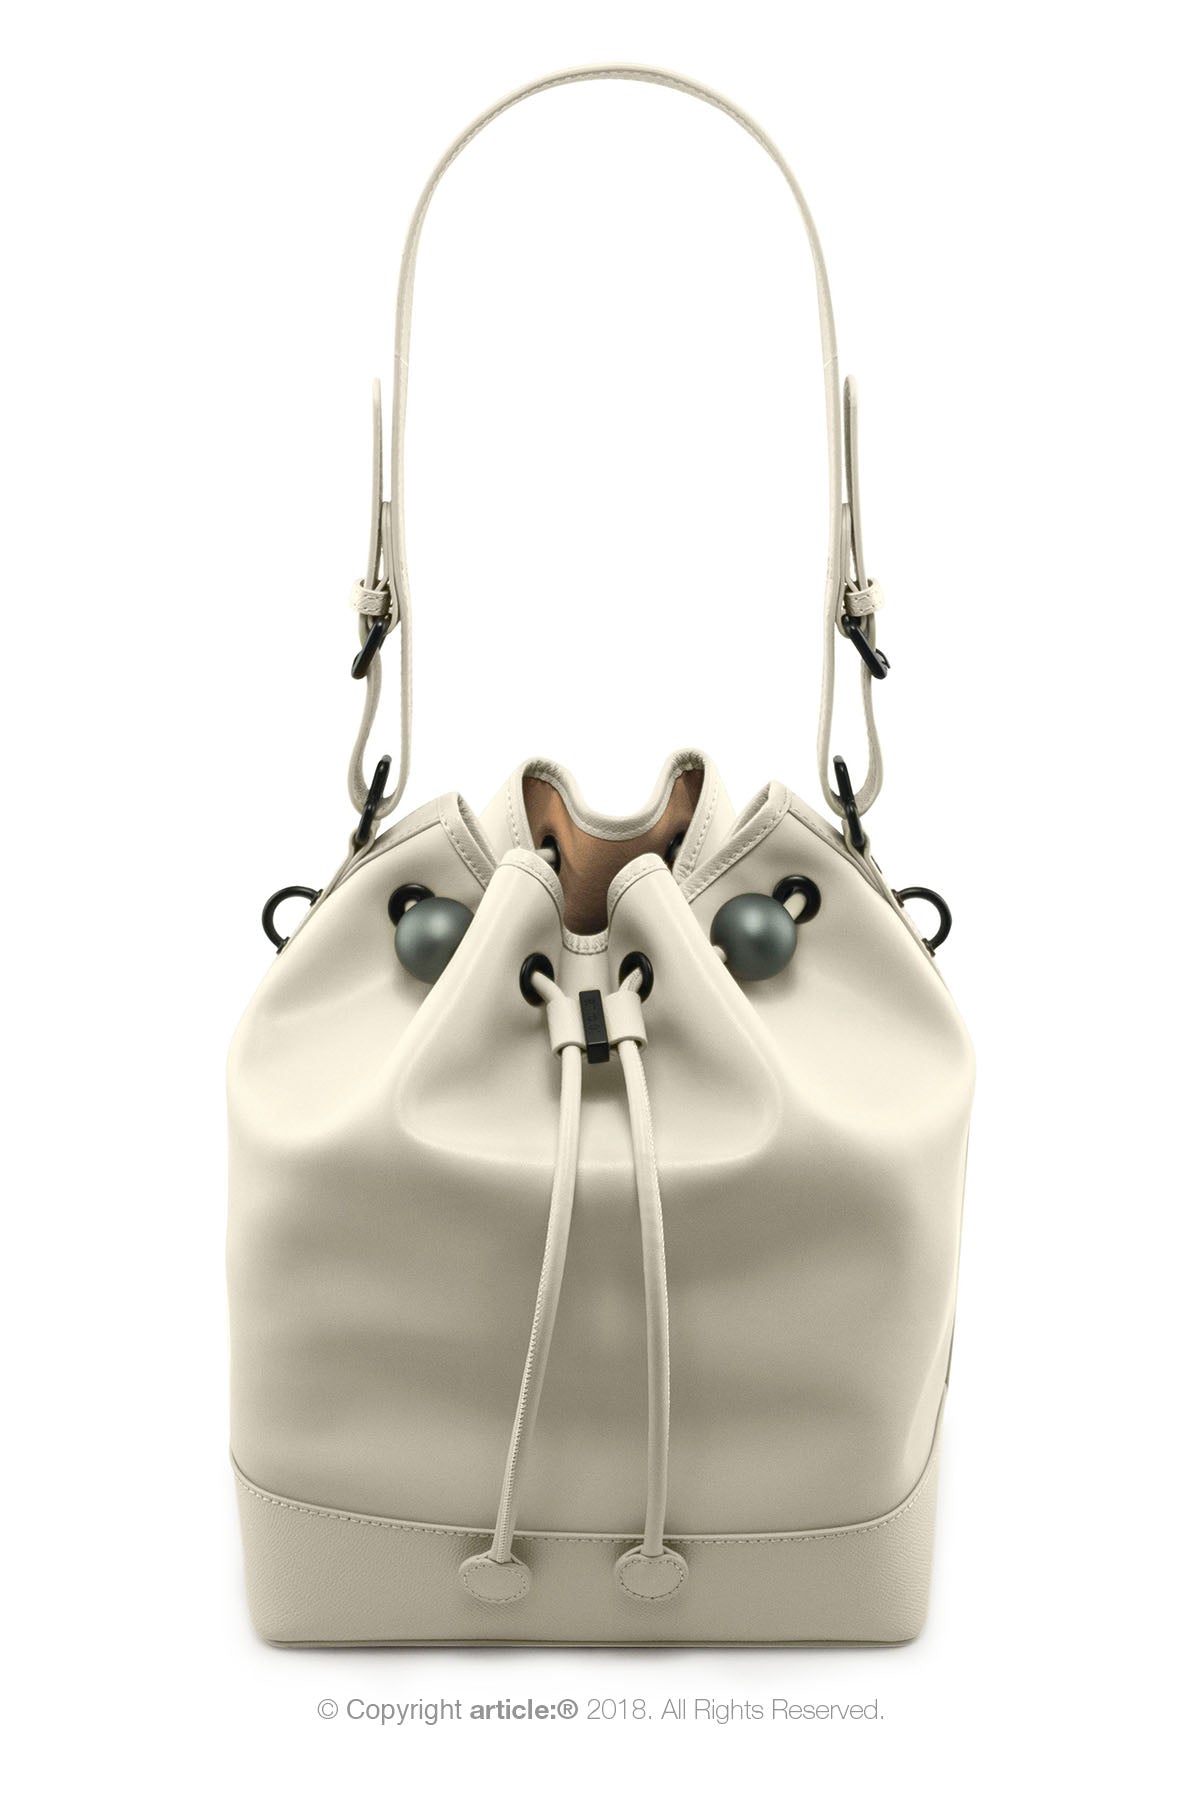 article: #120 Handbag Grande Bucket - Oyster